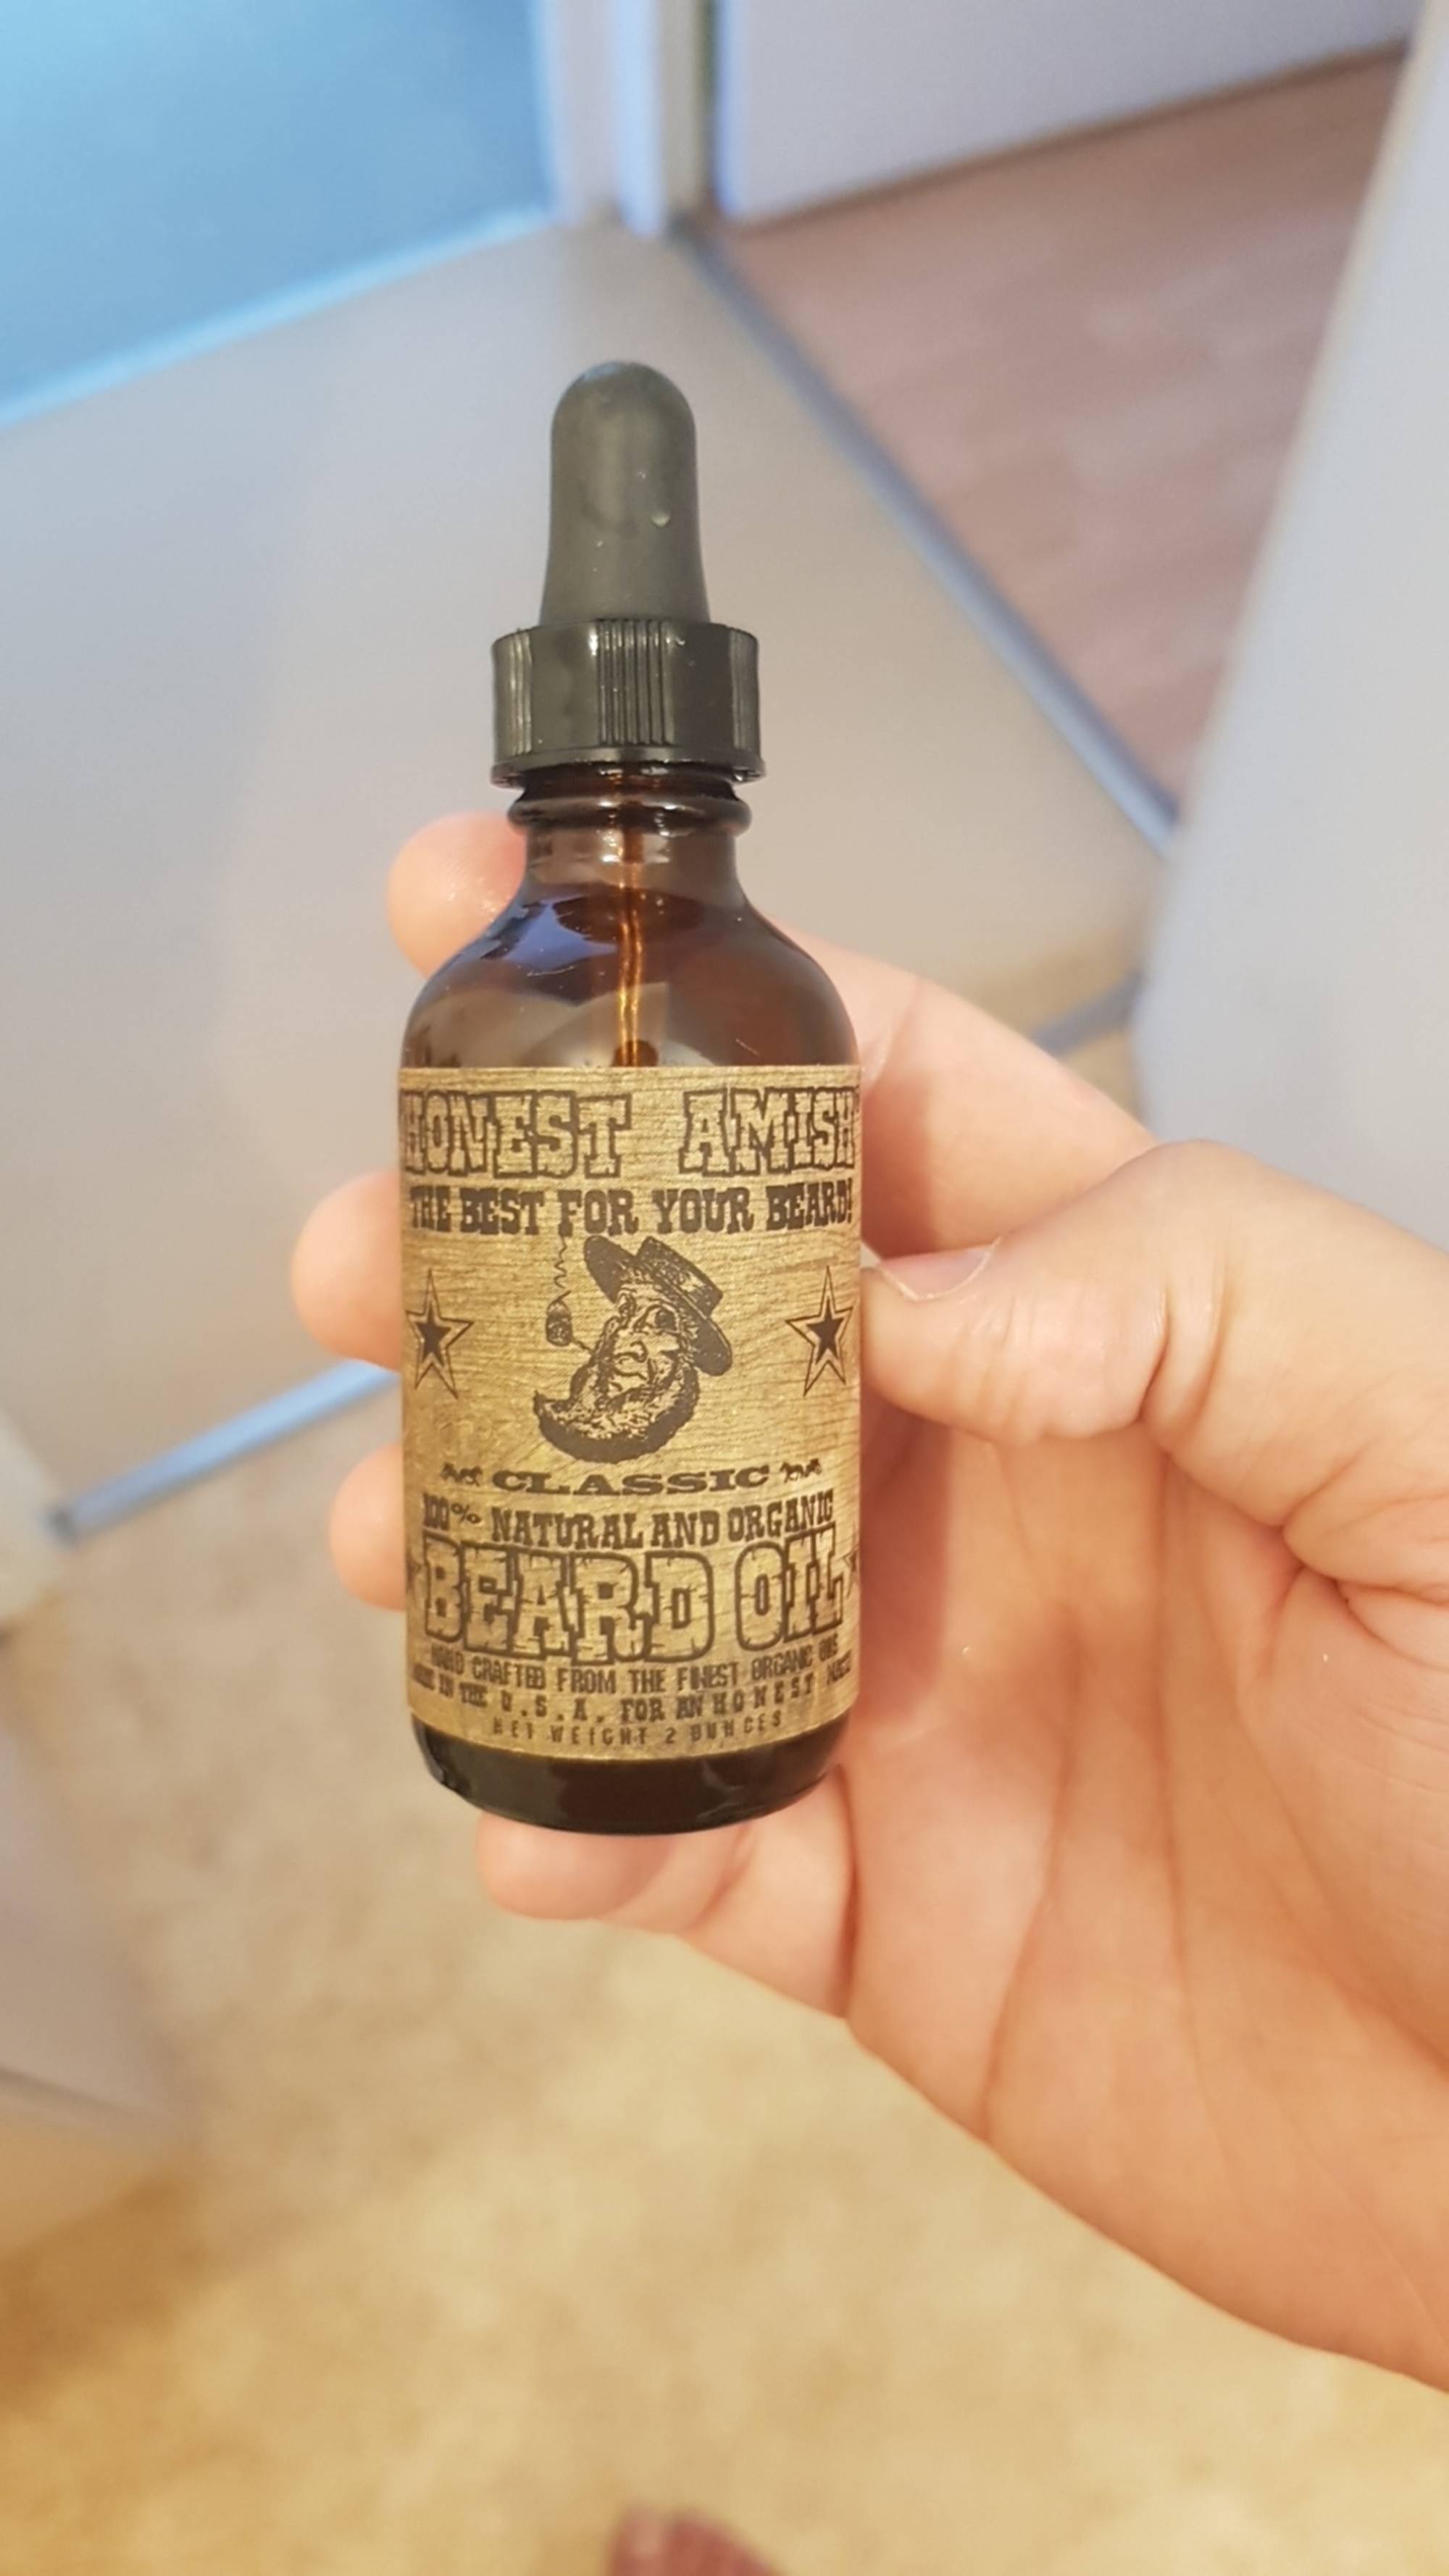 HONEST AMISH - The best for your beard - Beard oil